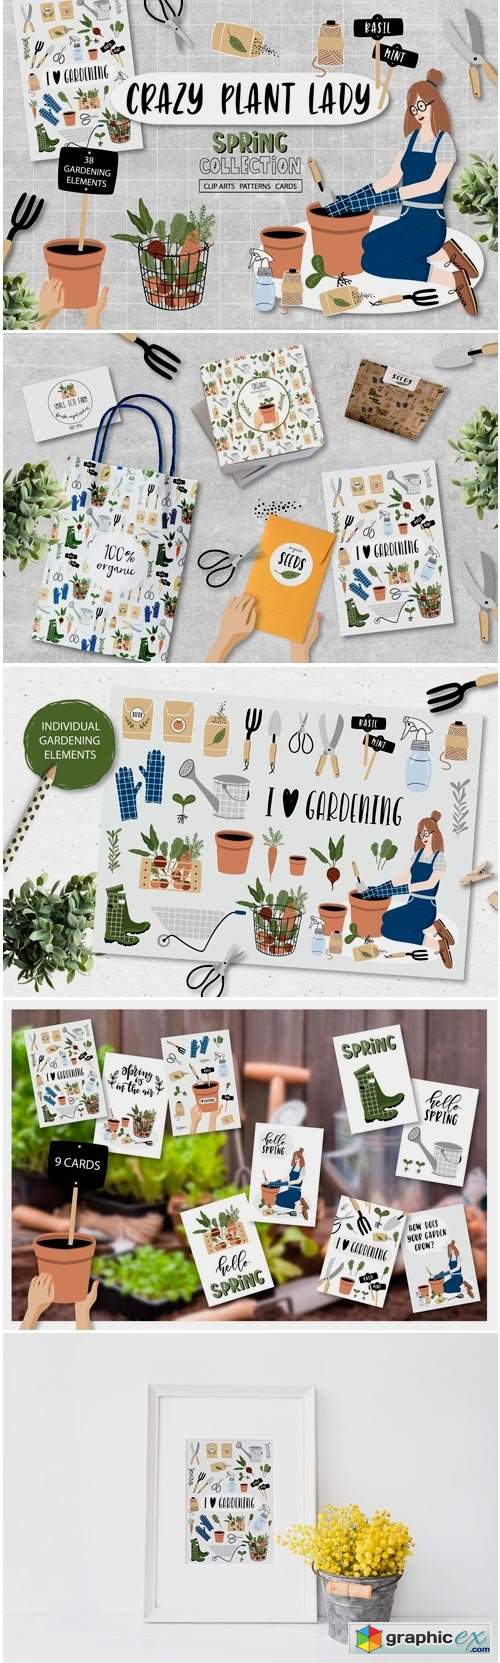 Crazy Plant Lady - Gardening Set